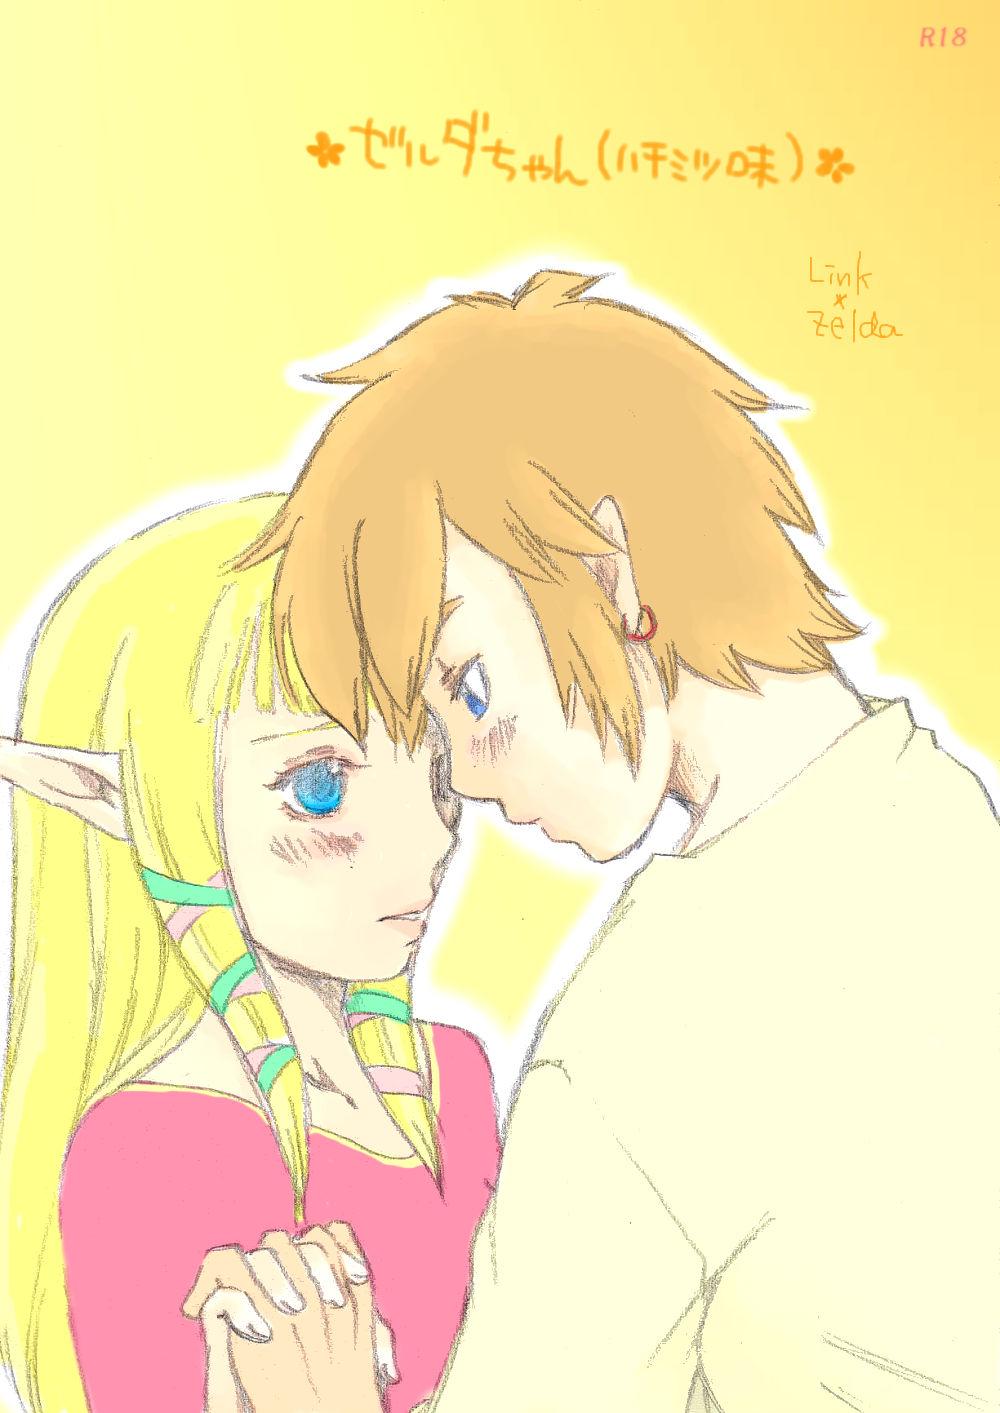 Pretty [Buthi] ✿ Zelda-chan (Honey flavored) ✿ (The Legend of Zelda: Skyward Sword) [English] - The legend of zelda Milfsex - Picture 1